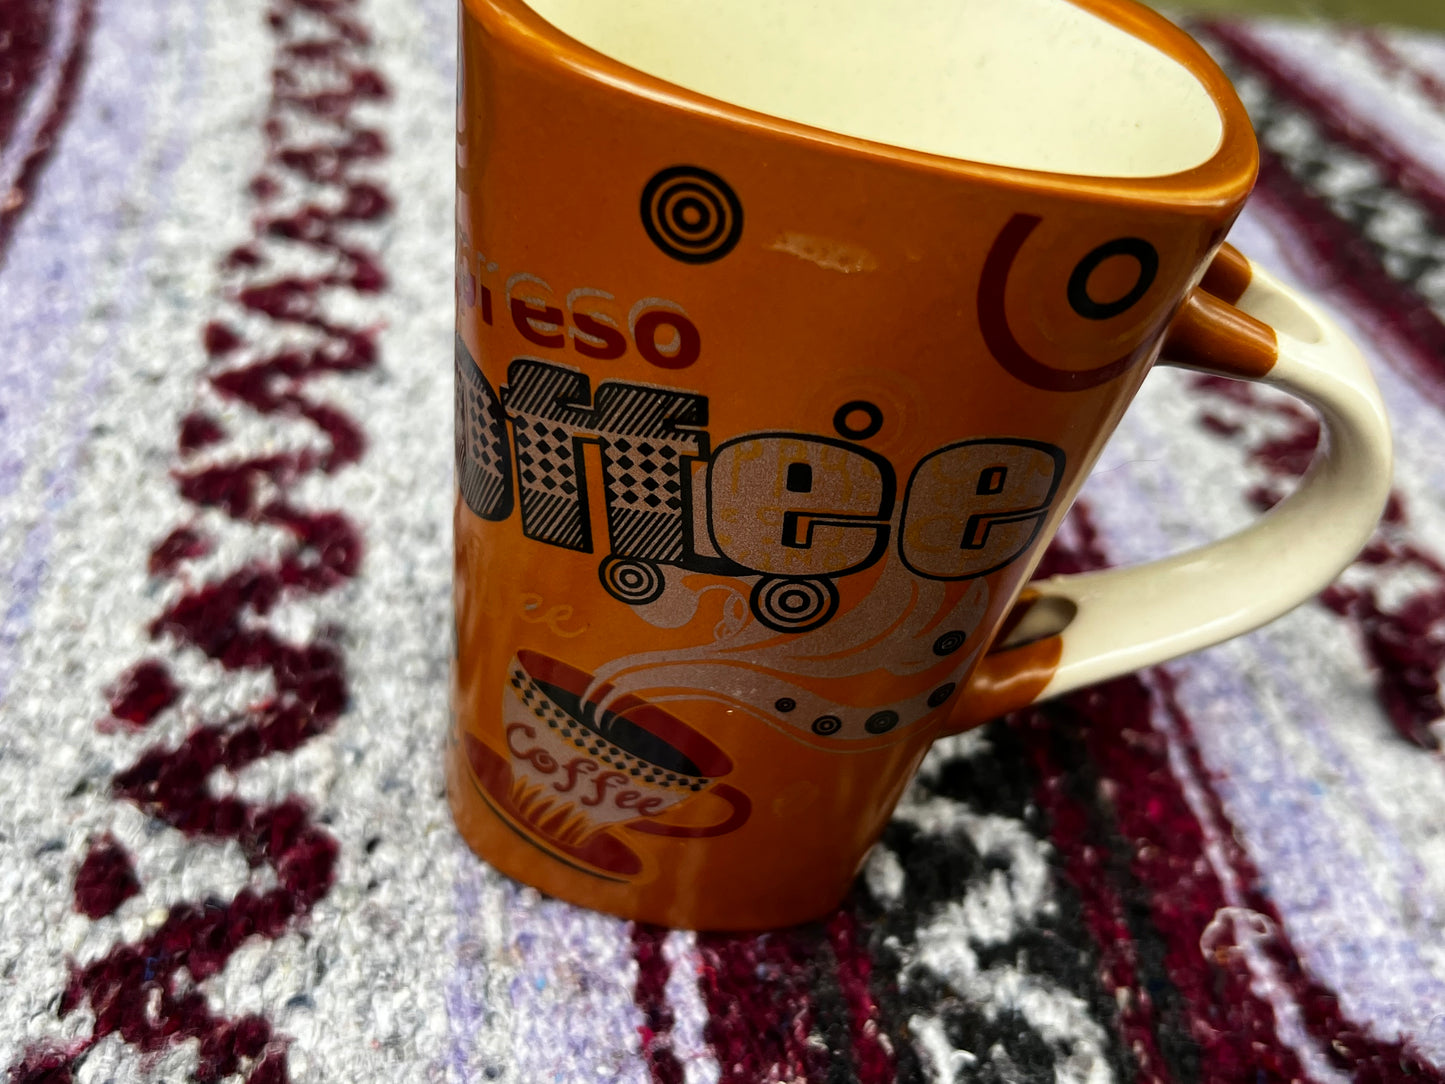 Cozumel Coffee Cup